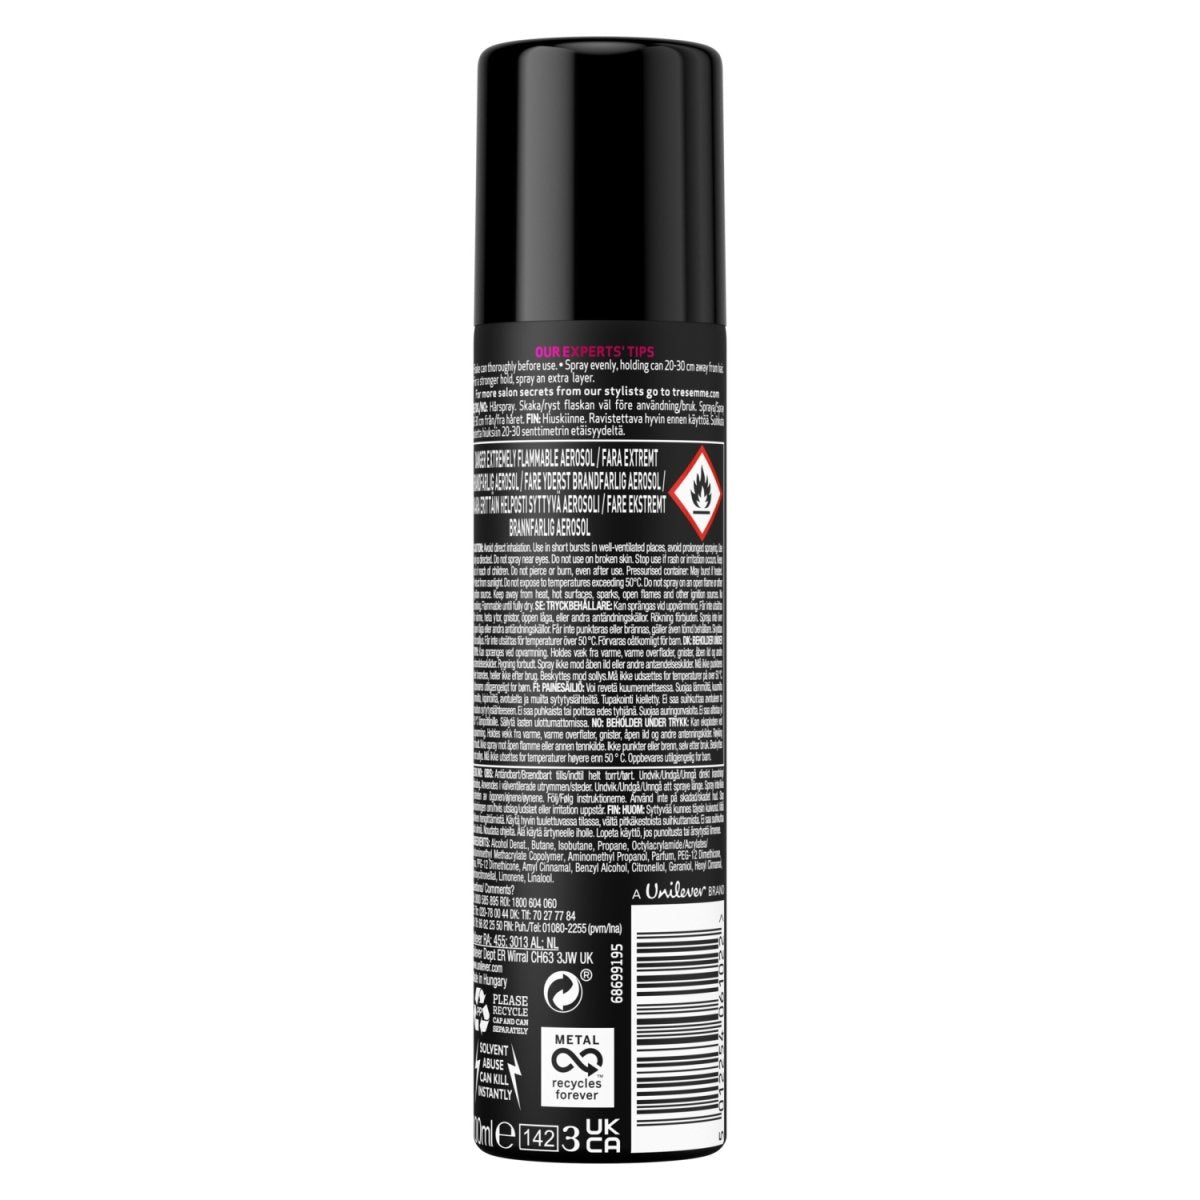 Tresemme Hair Spray Extra Firm Hold - Intamarque 5012254061022